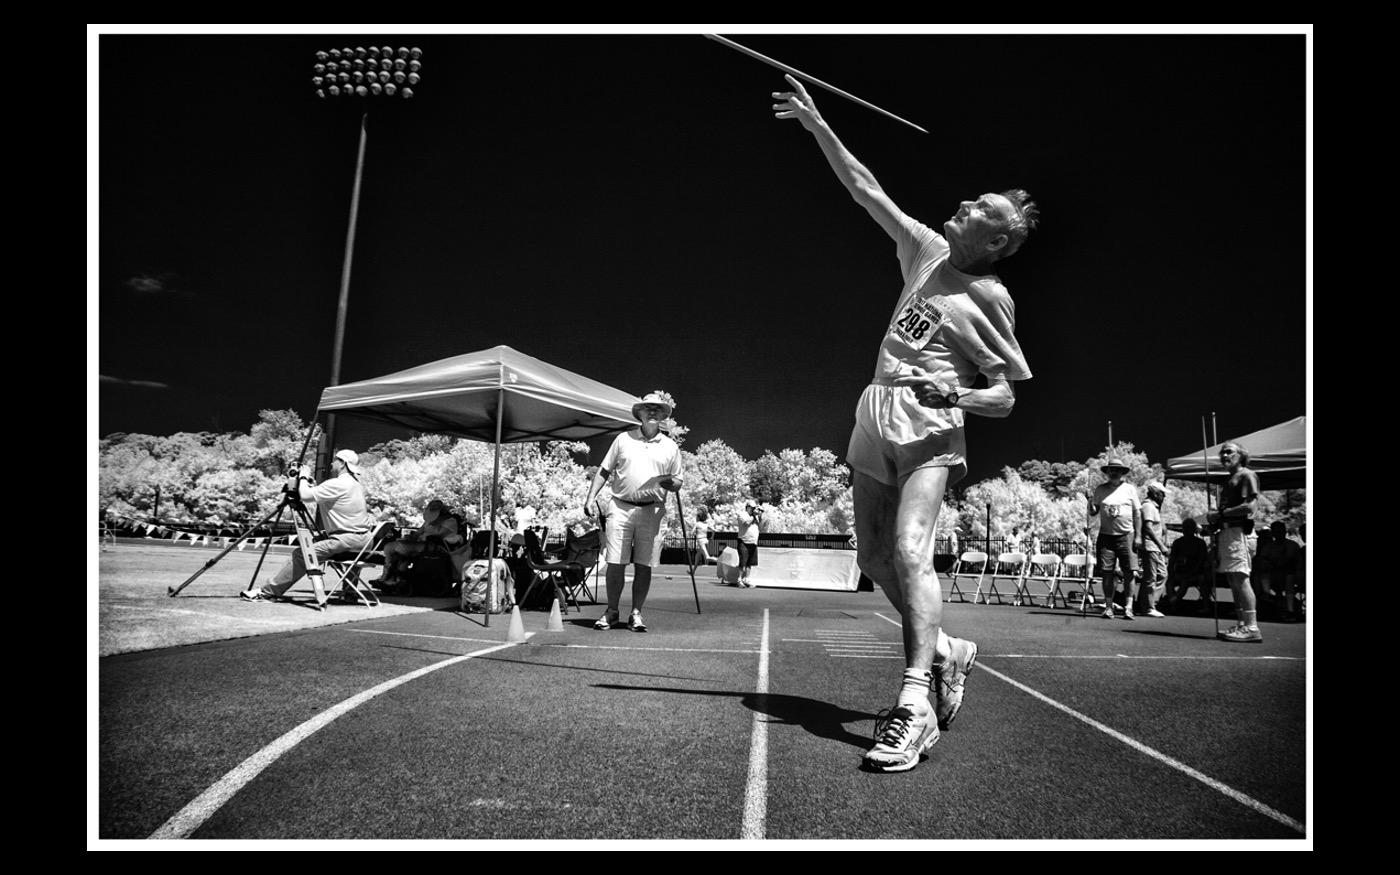 Throwing a Javelin
National Senior Games 2019 : Looking Back: 60 Years of Photographs : David Burnett | Photographer